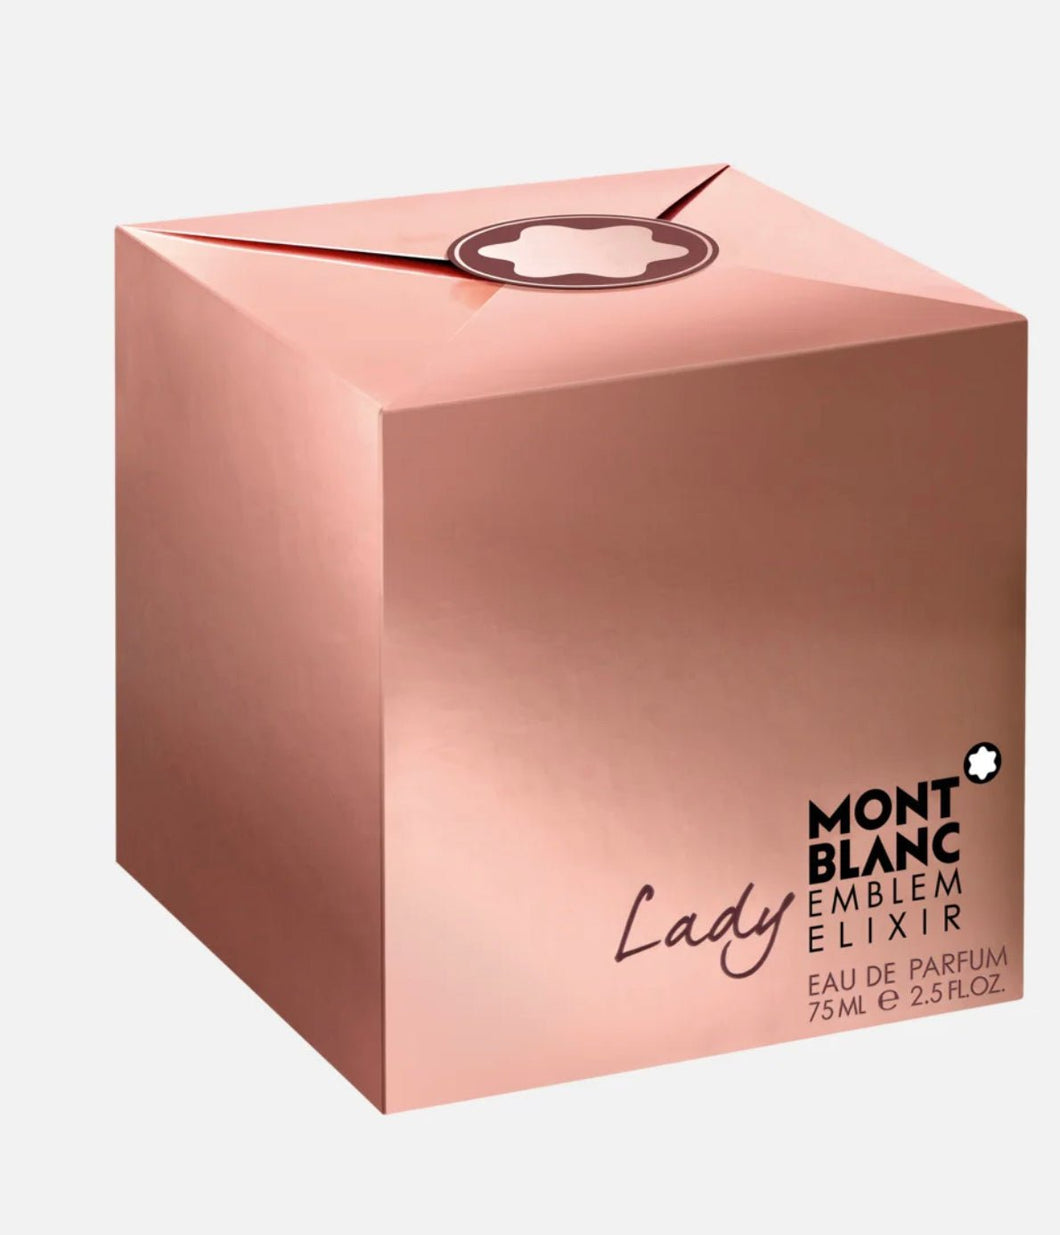 Montblanc-Lady Emblem Elixir - Eau de Parfum, 75 ml 116848